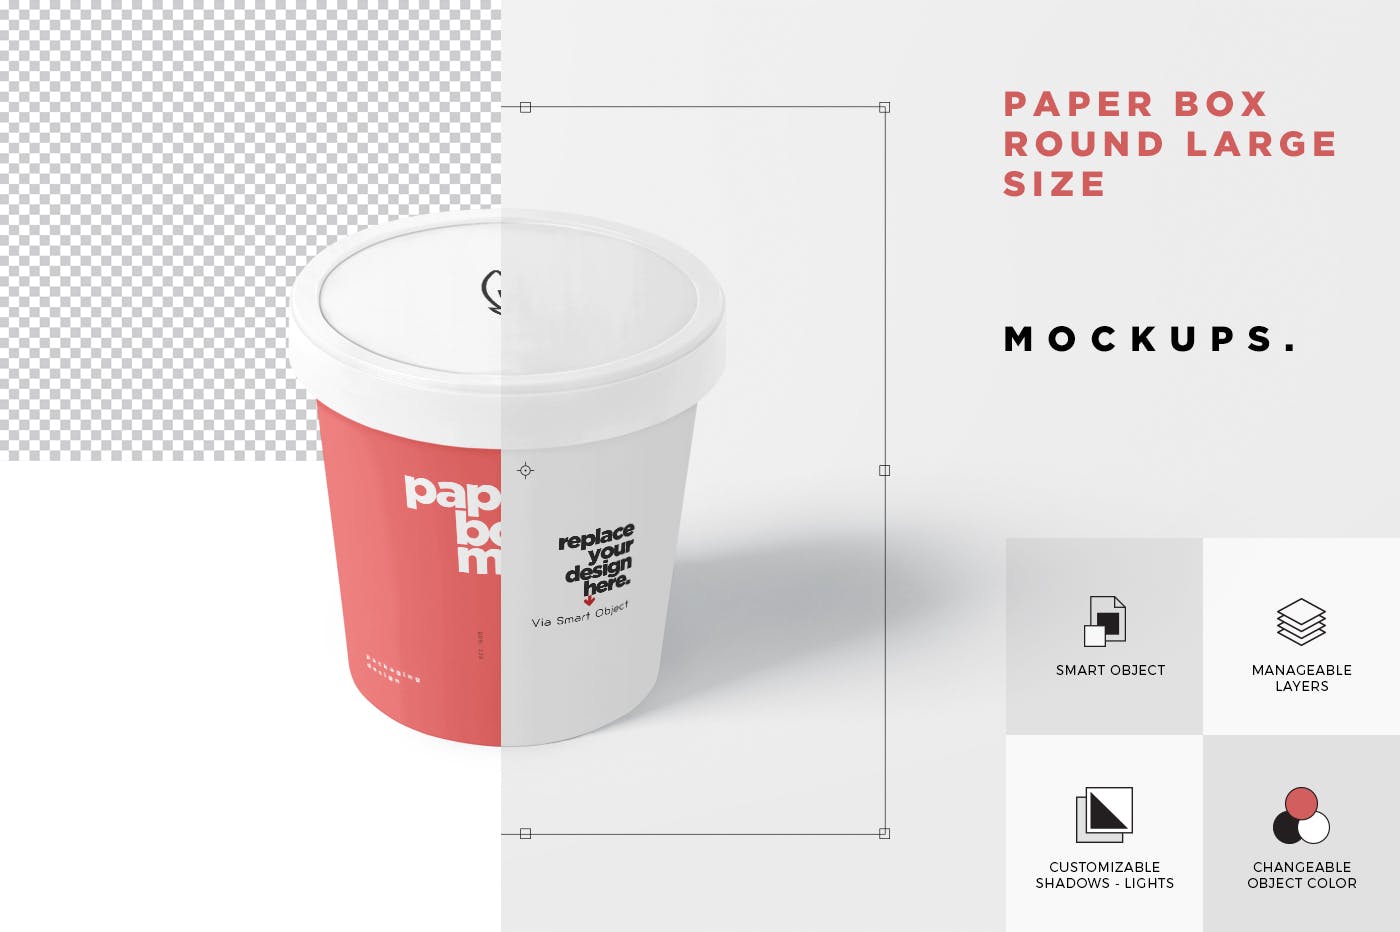 桶状纸筒包装设计效果图样机模板 Paper Box Mockup PSDs Round – Large Size插图(6)